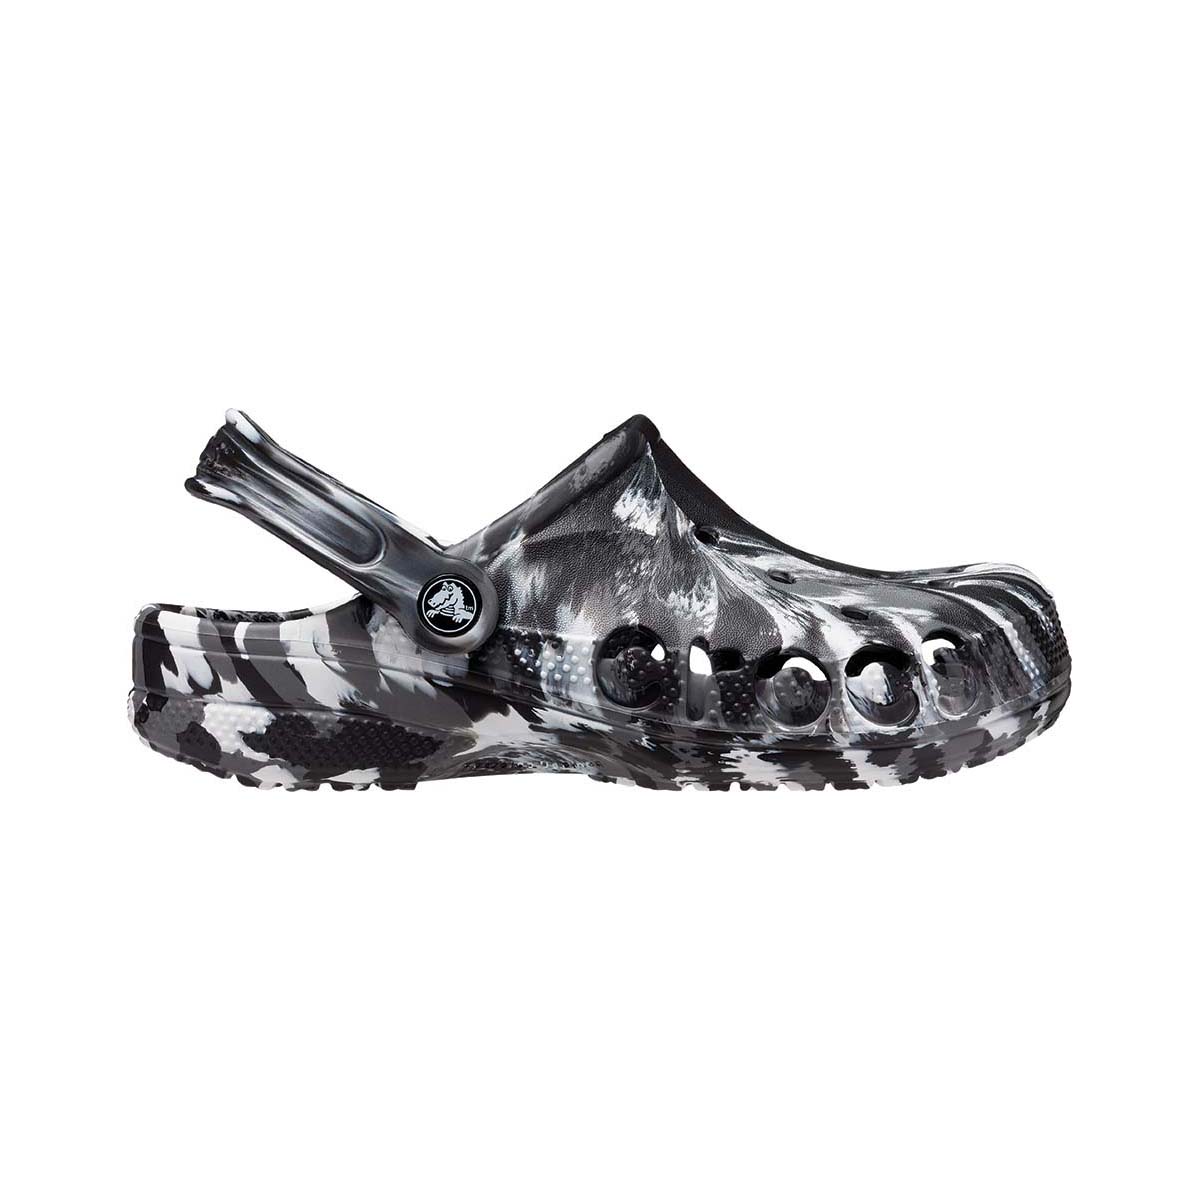 Crocs Unisex Baya Marbled Clogs Black/White M4/W6